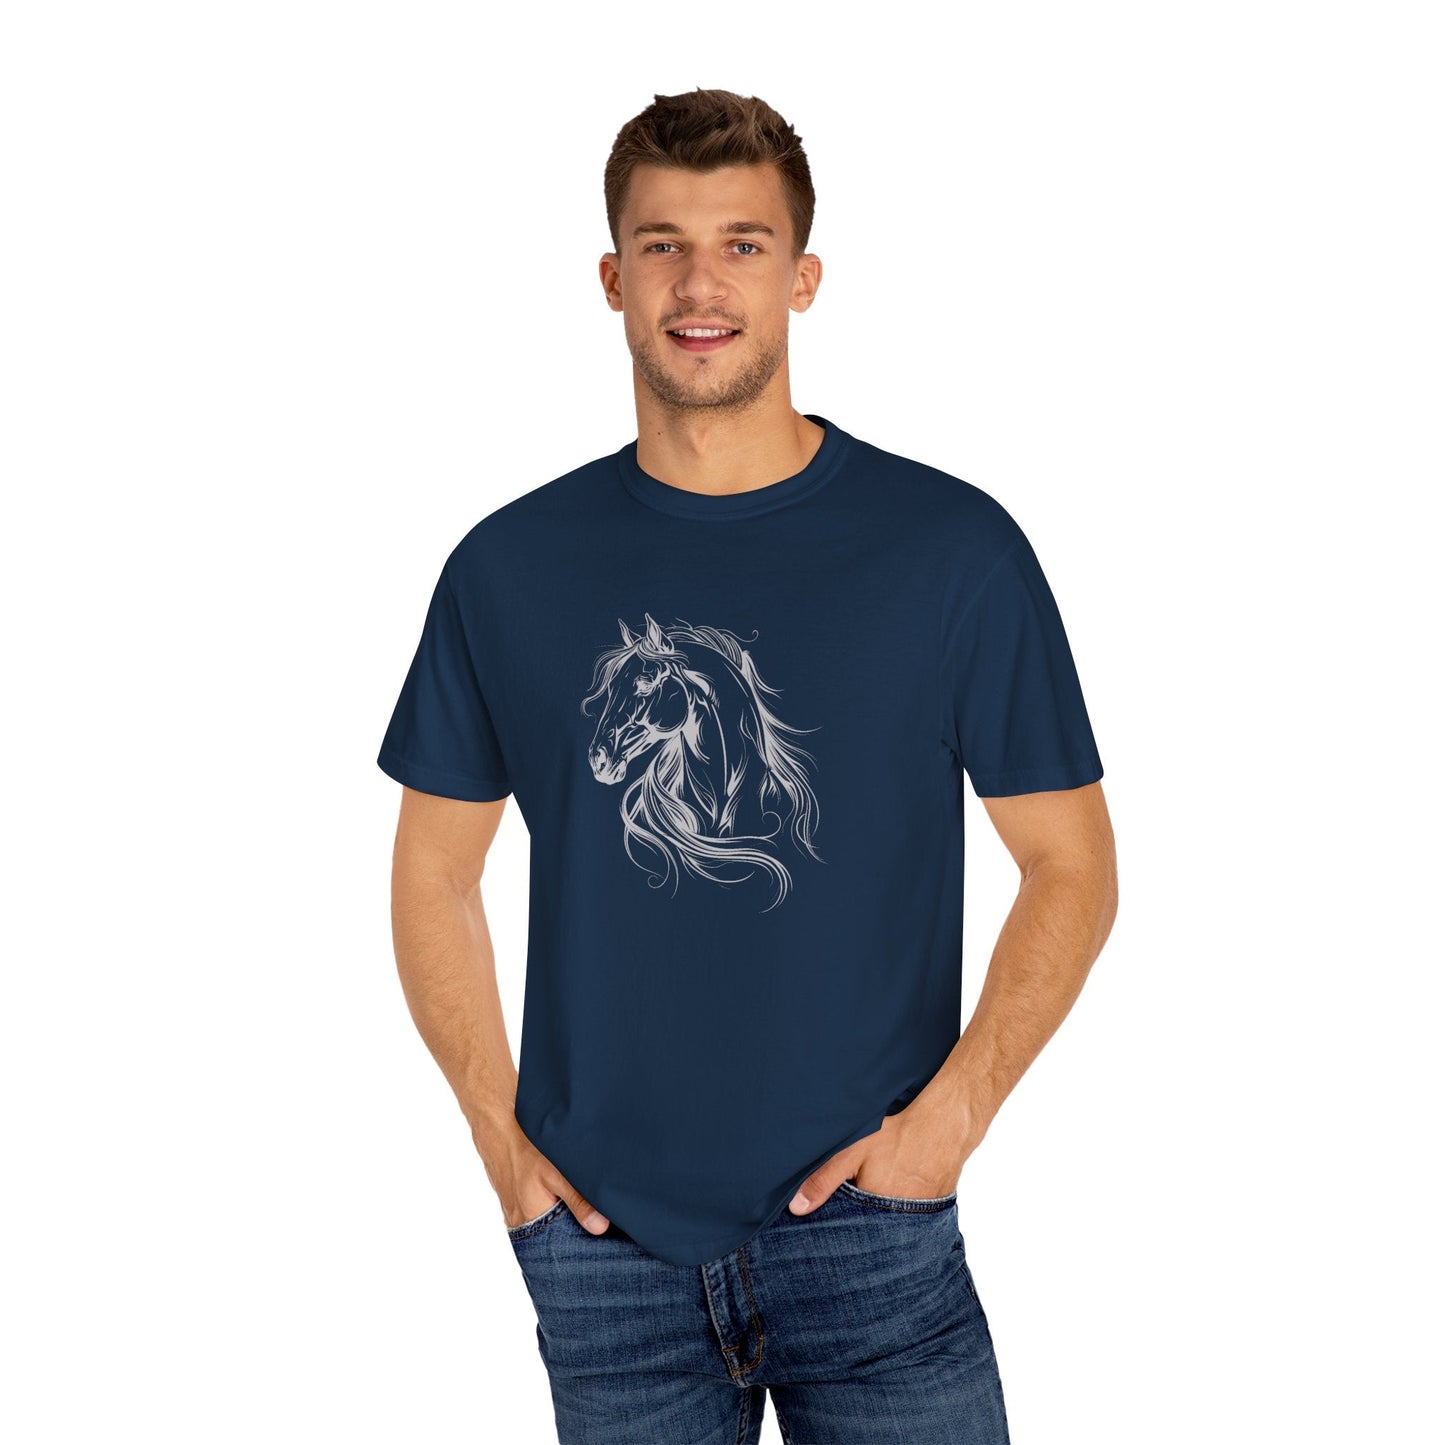 Horse Art Tshirt, Spirited Drawing of a Horse, Comfort Colors Shirt - FlooredByArt